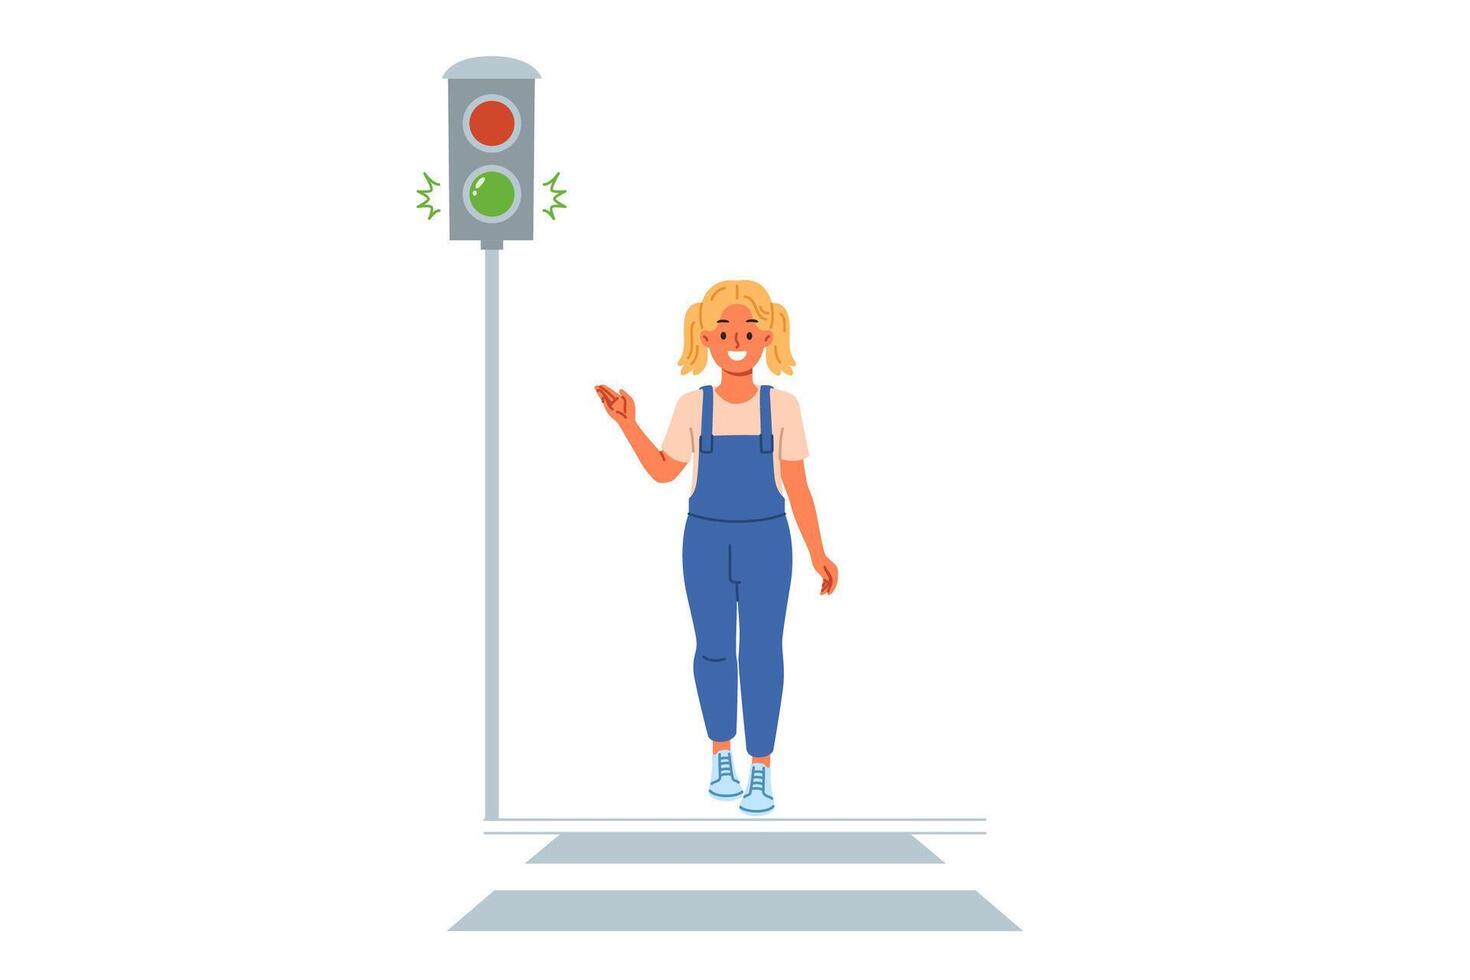 Traffic light shows green signal for little girl walking along pedestrian crossing vector